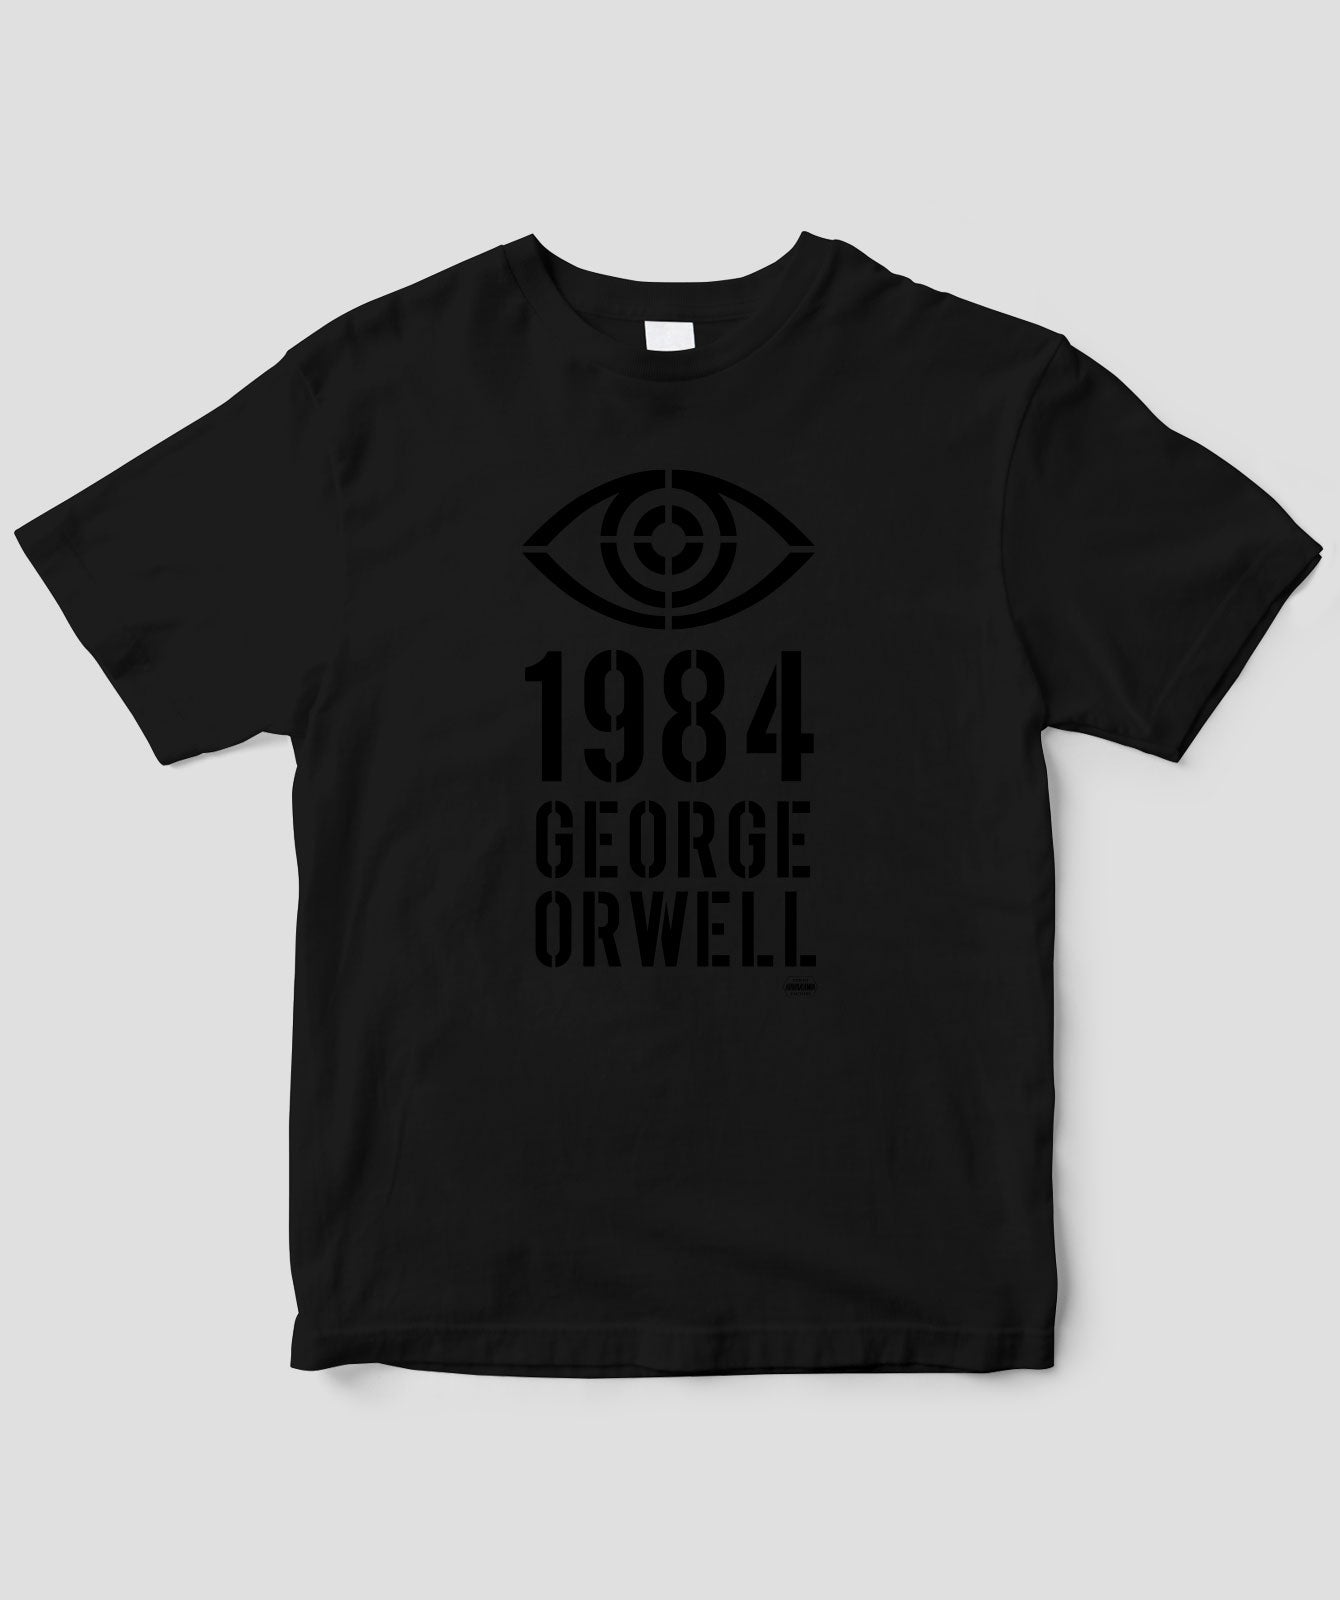 【キッズ】一九八四年 / George Orwell 黒×黒 / 早川書房